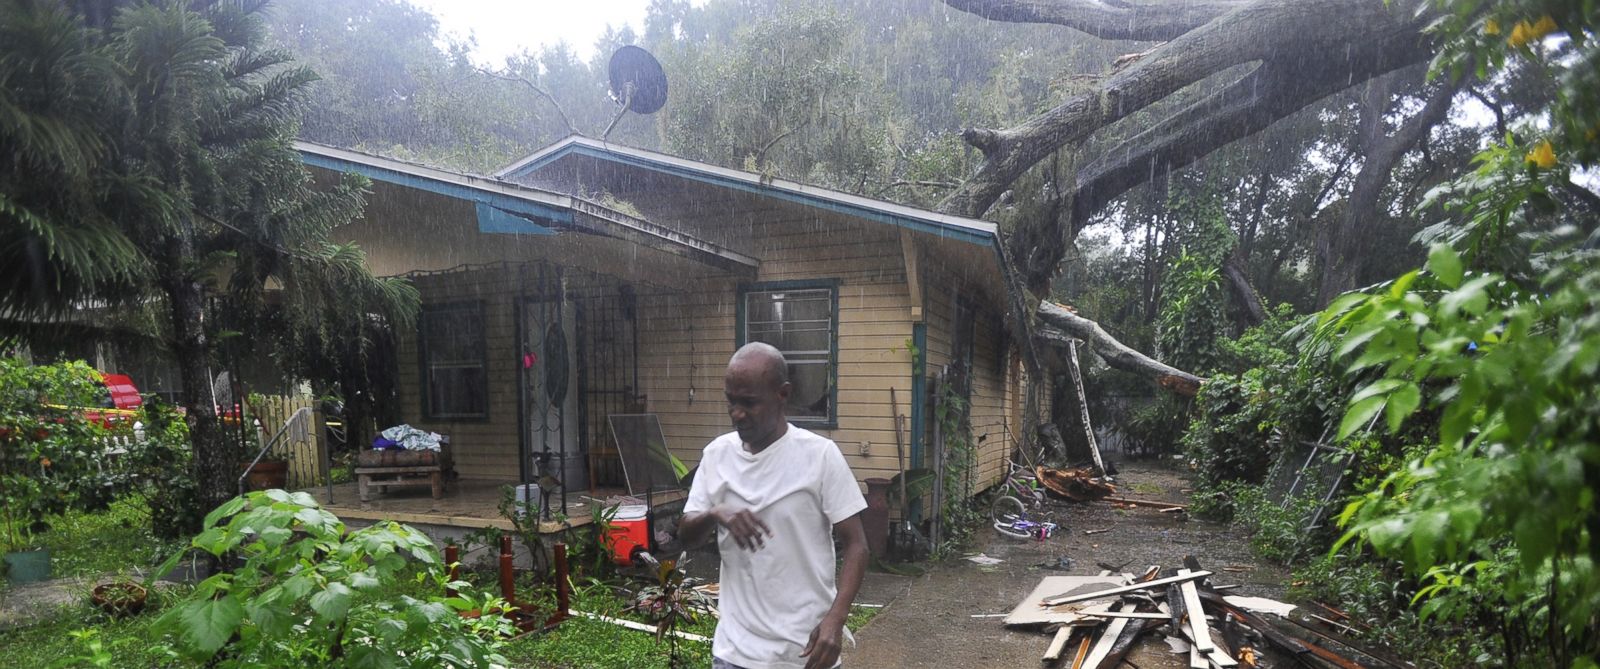 Résultats de recherche d'images pour « Florida Gov. Calls Hurricane 'Life Threatening' as Gulf Coast Hunkers Down for Hermine »